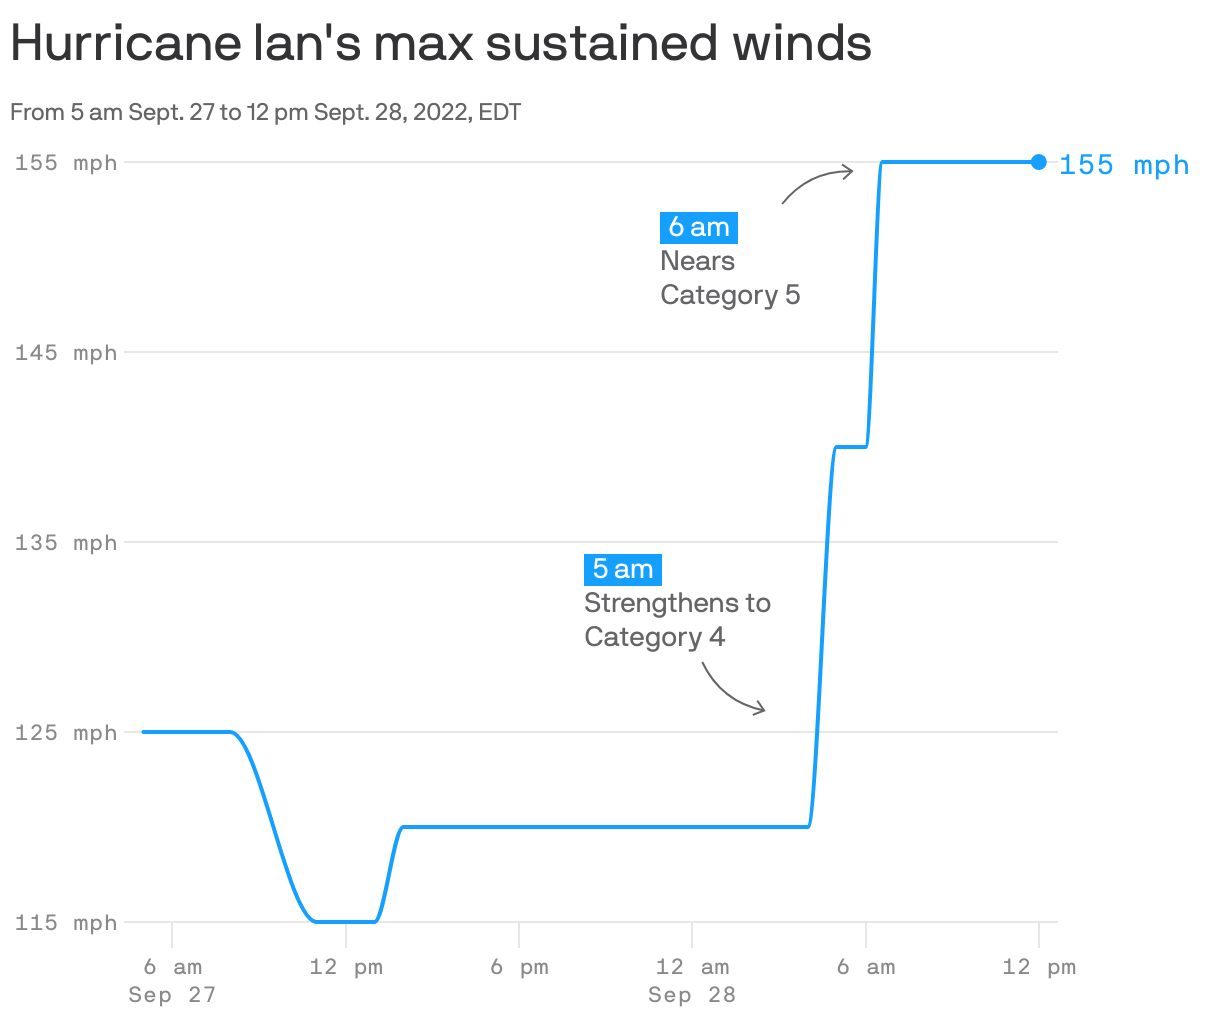 Hurricane Ian's max sustained winds